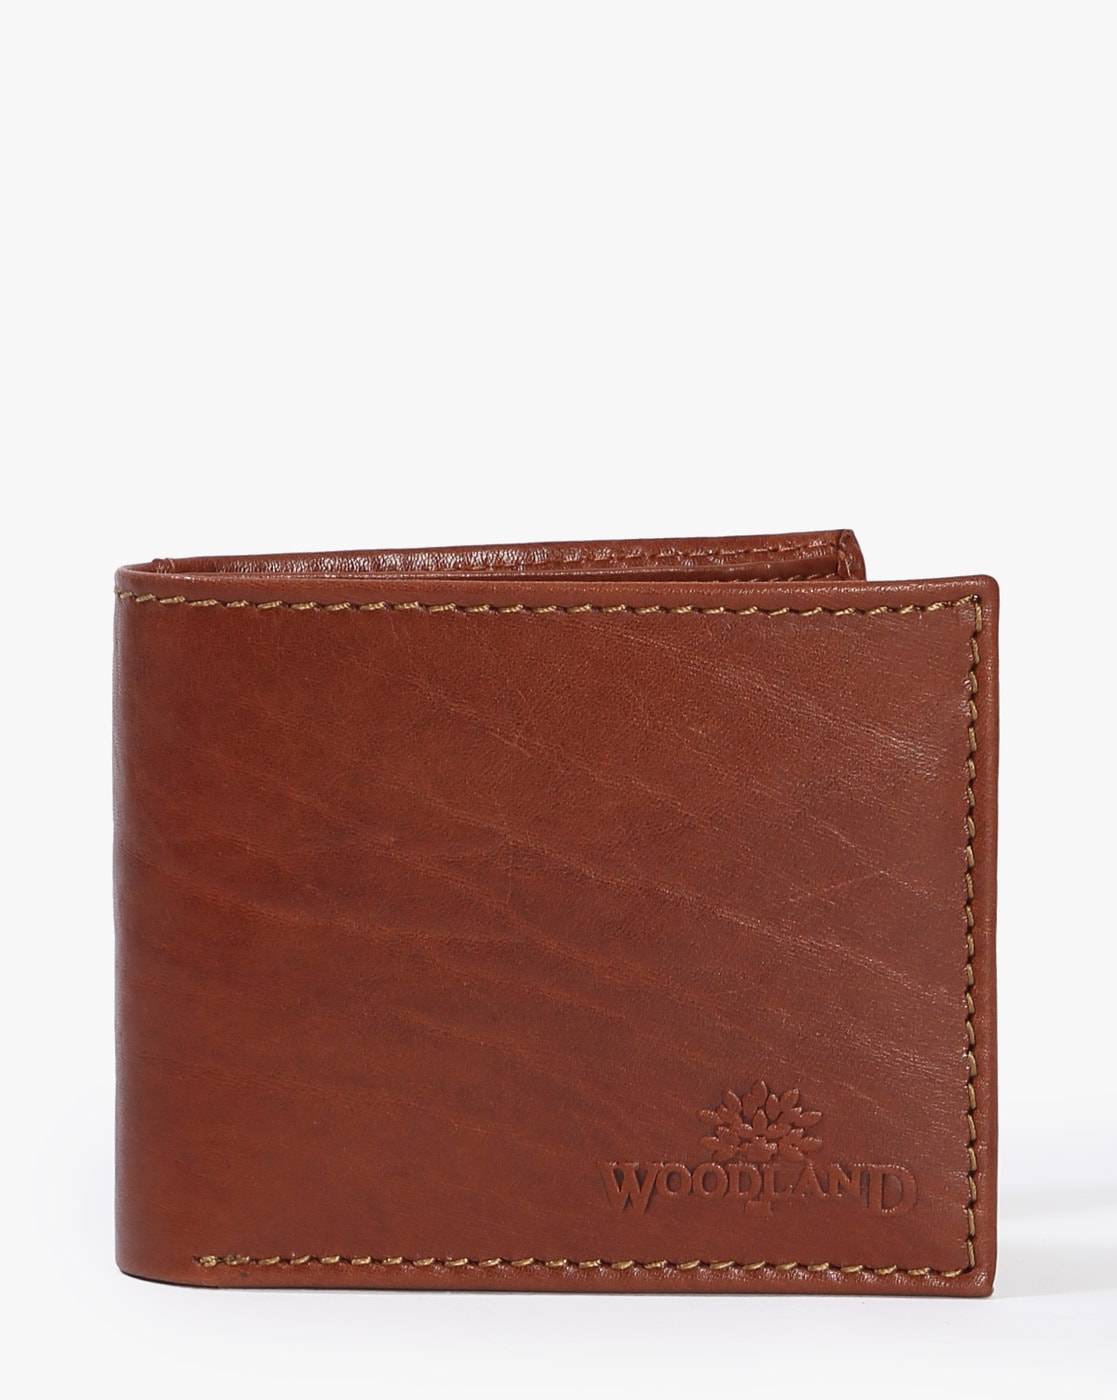 No. 03 Wallet // Woodland - Bexar Goods Co.